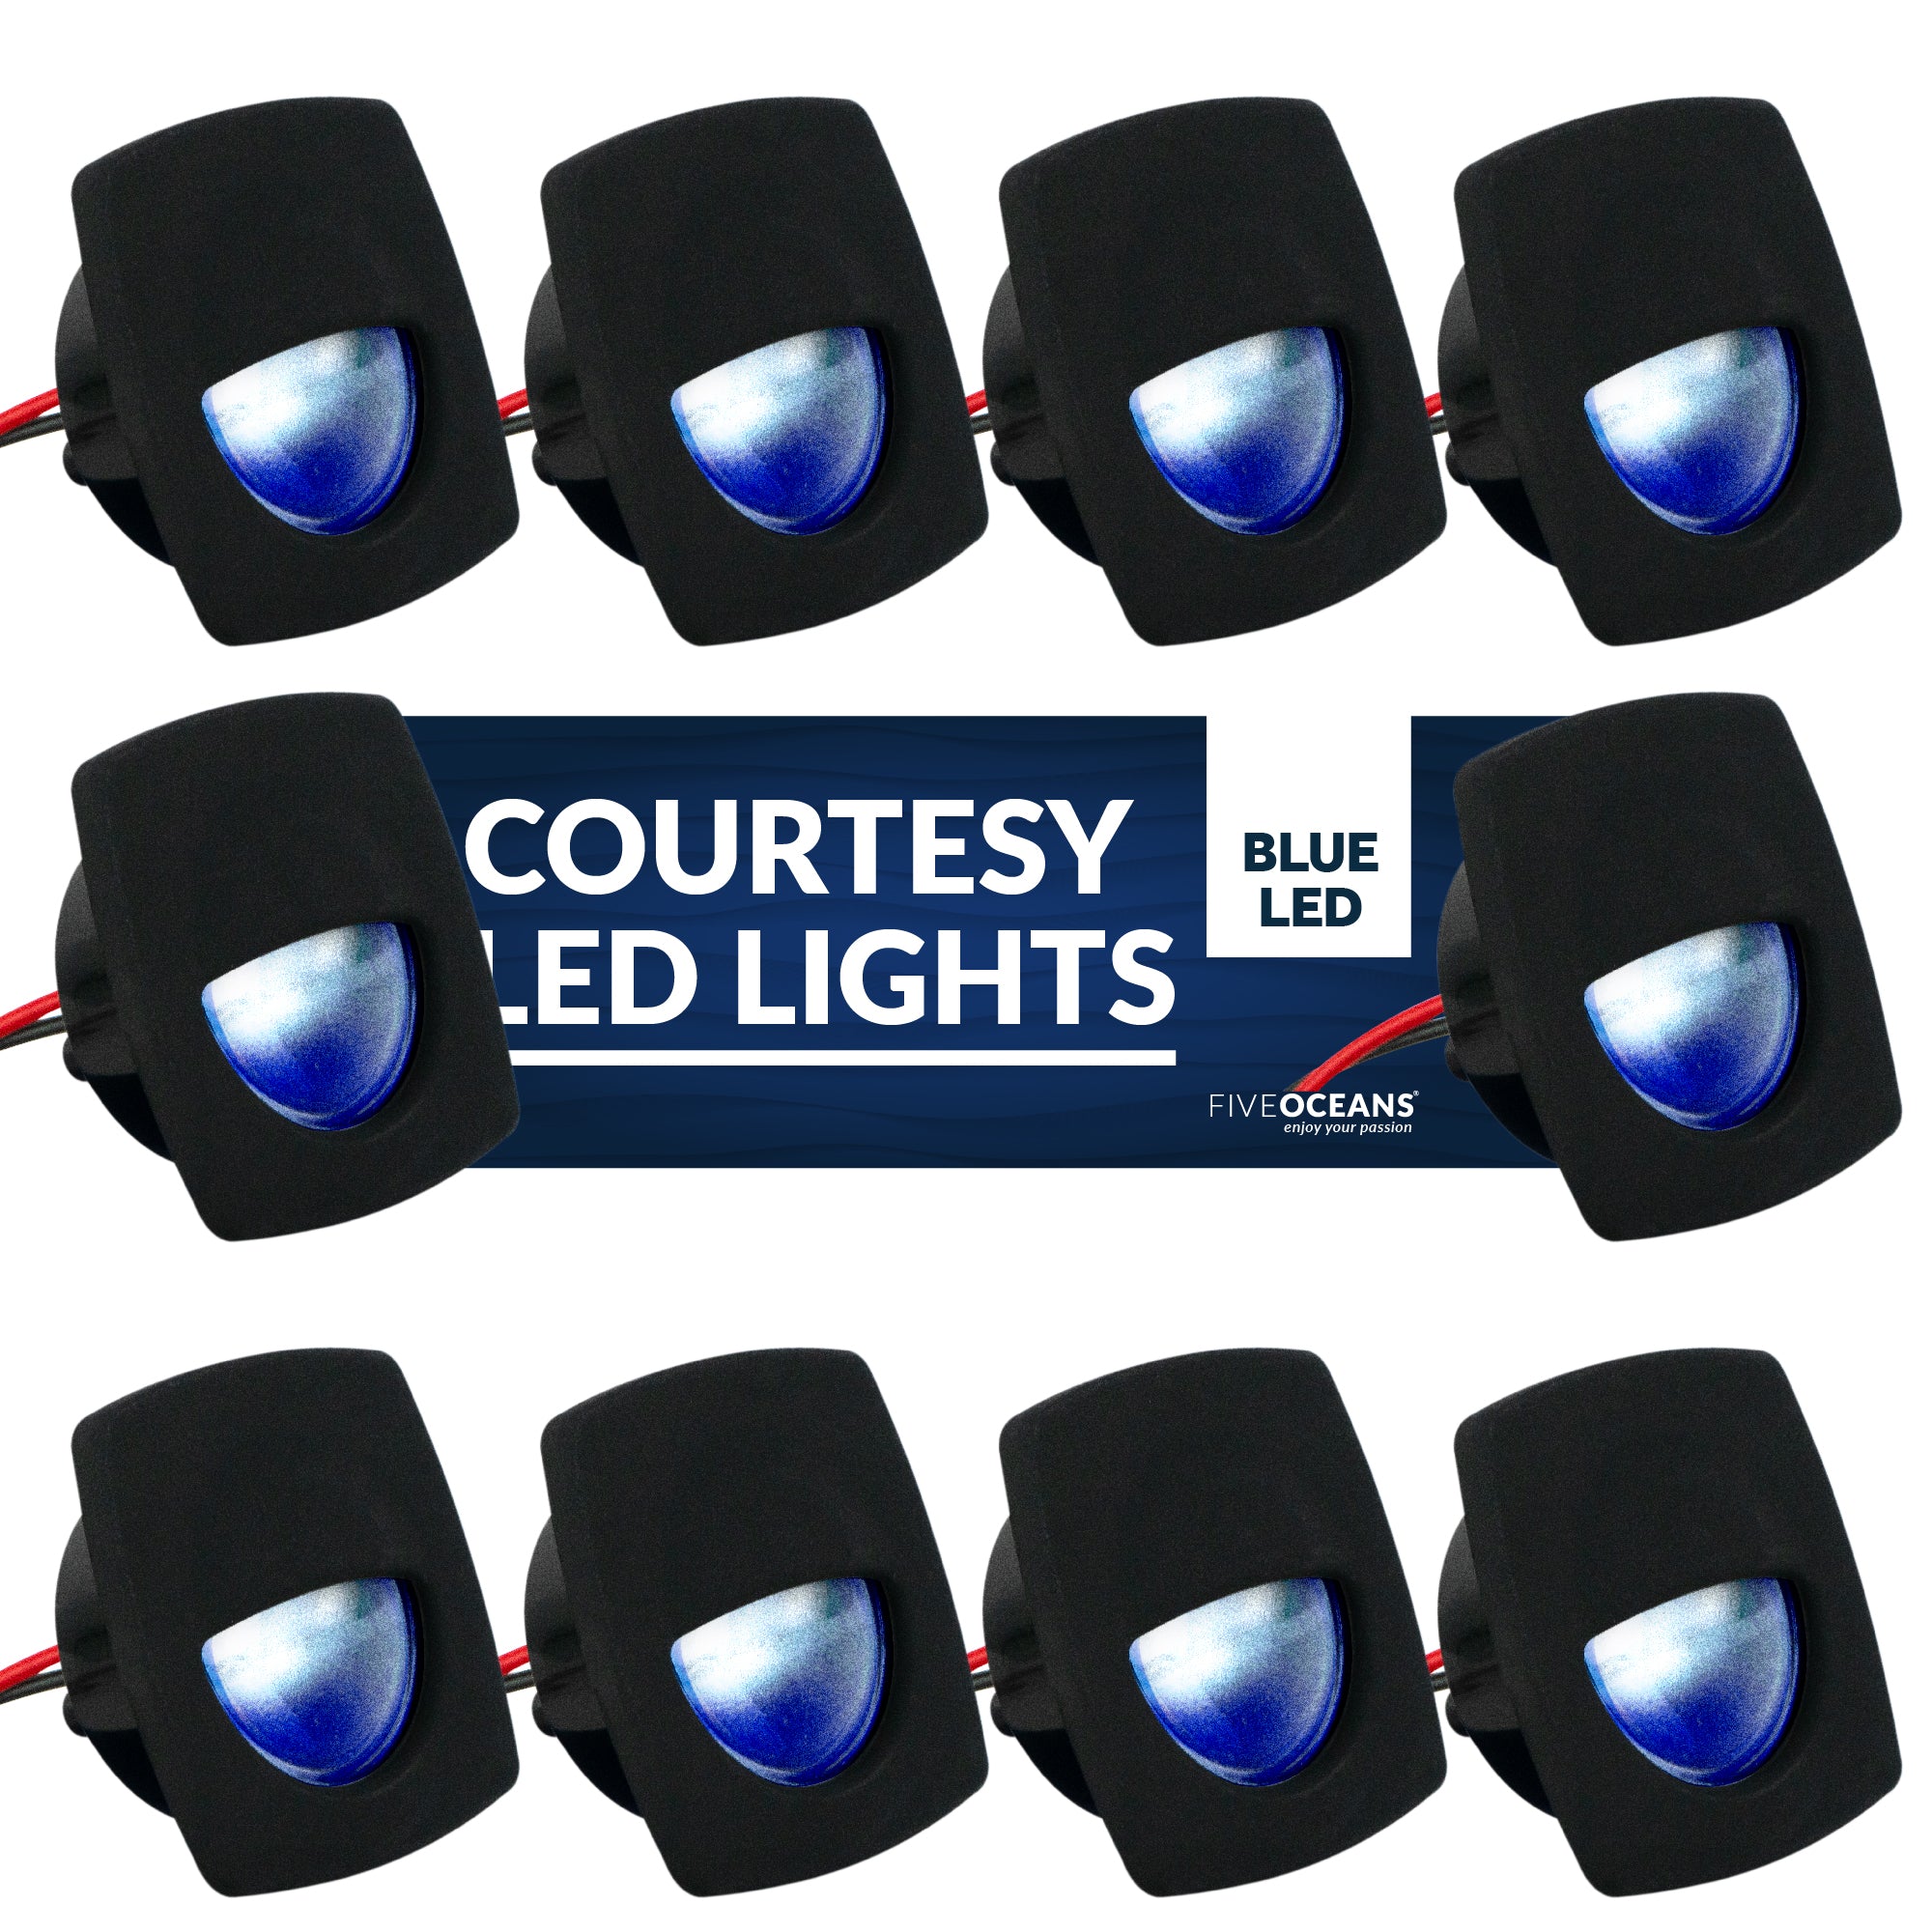 LED Courtesy Companion Way Light, Square, Blue light, 10-pack - FO4002-M10